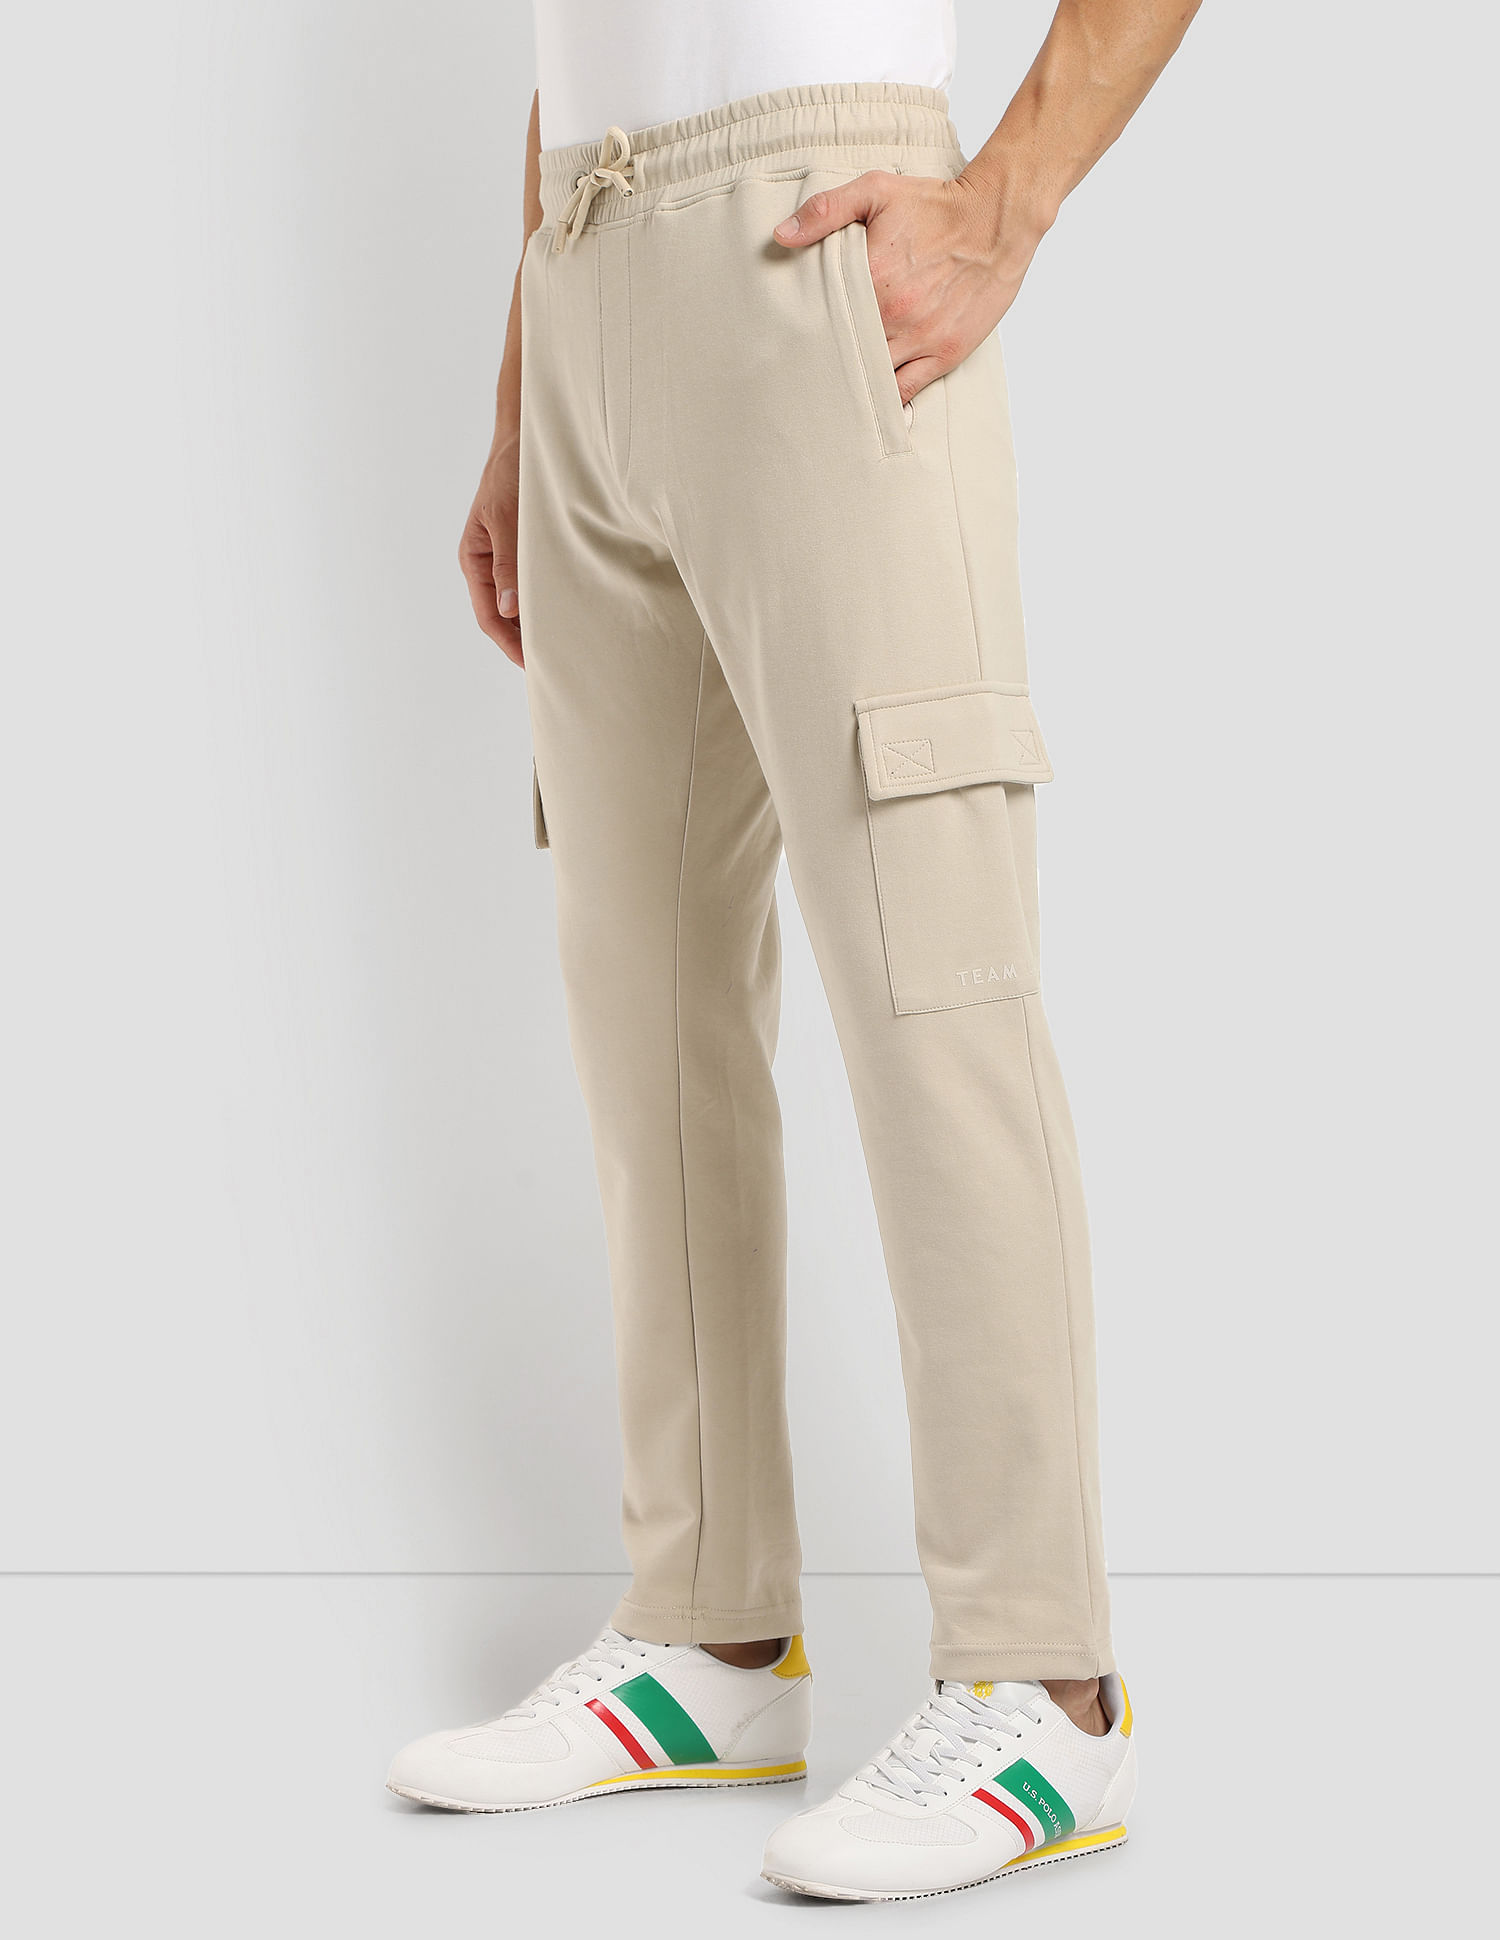 US Polo Assn Cargo Pants Boys Size 18 Khaki Elastic Stretch Waist Tapered  Ankle | eBay